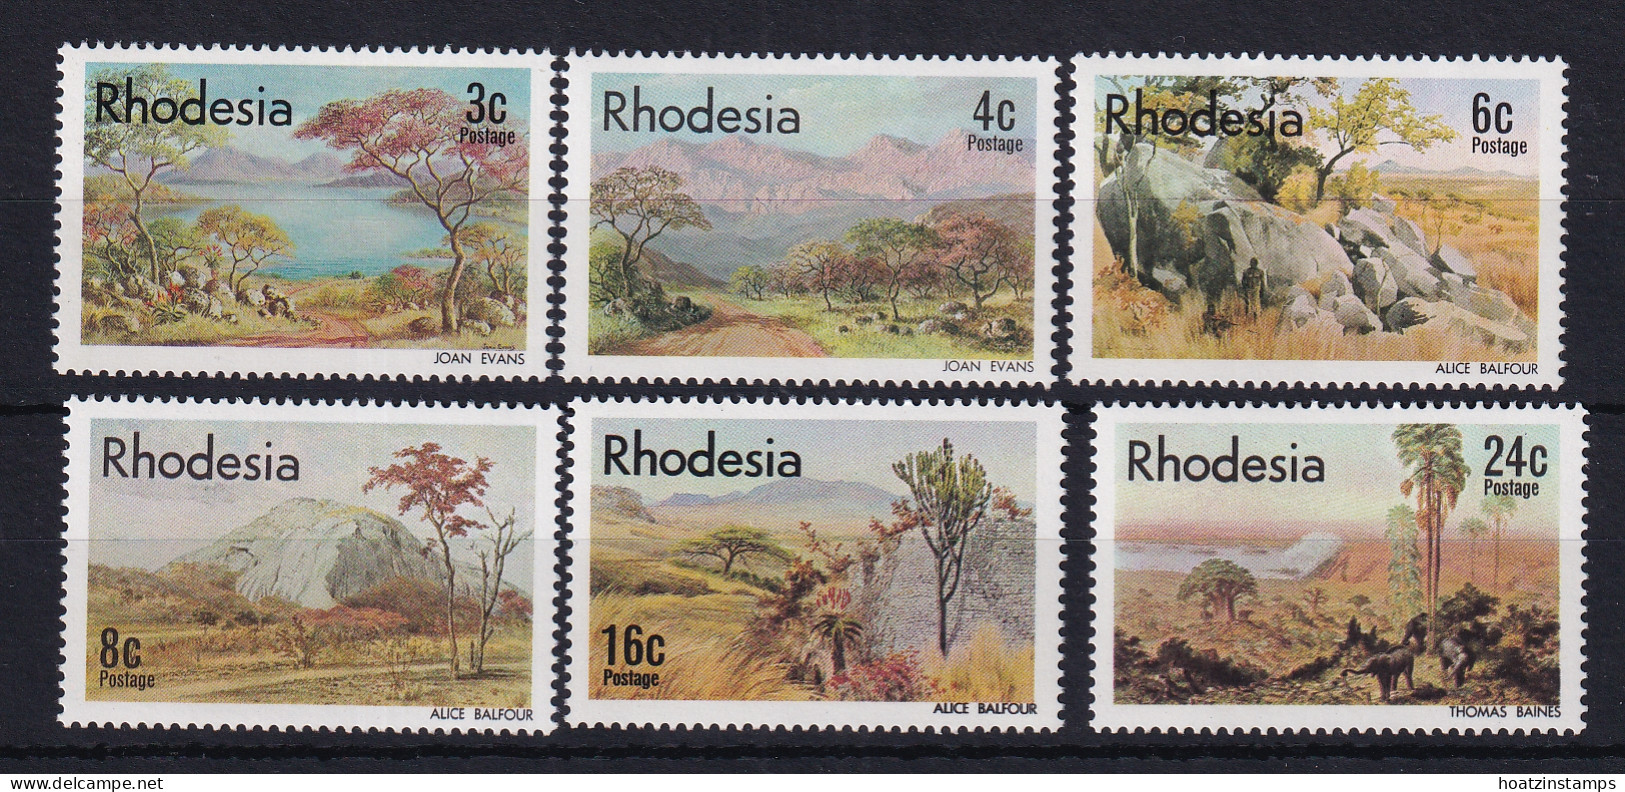 Rhodesia: 1977   Landscape Paintings       MNH - Rhodesia (1964-1980)